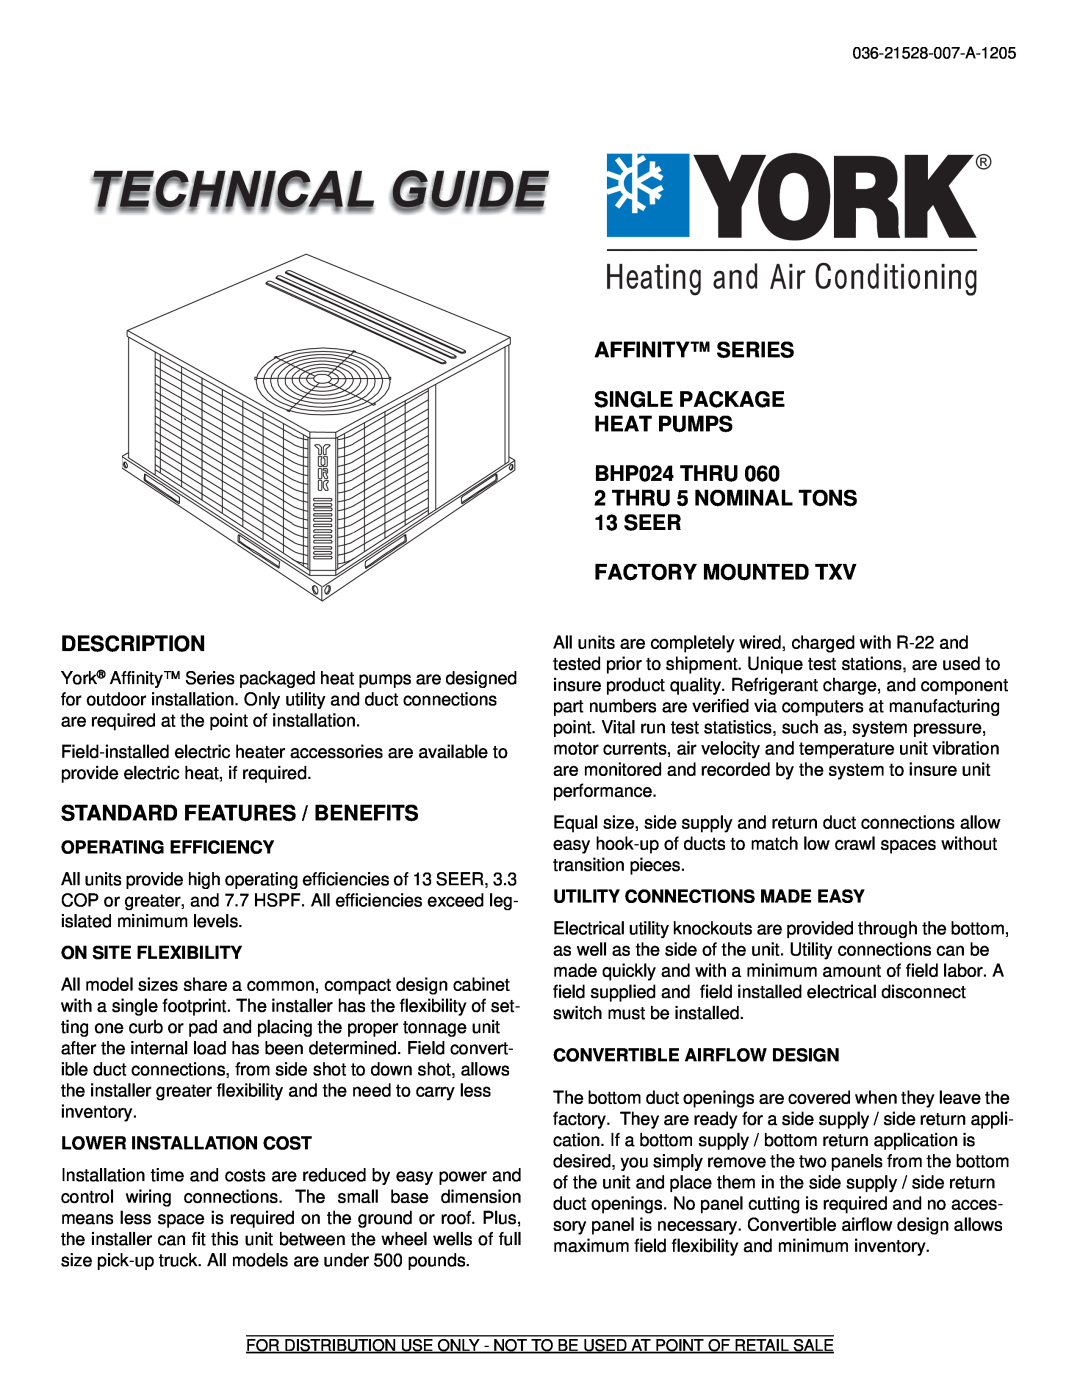 York BHP024 manual Description, Standard Features / Benefits, Champion Ultra Single Package Heat Pumps 